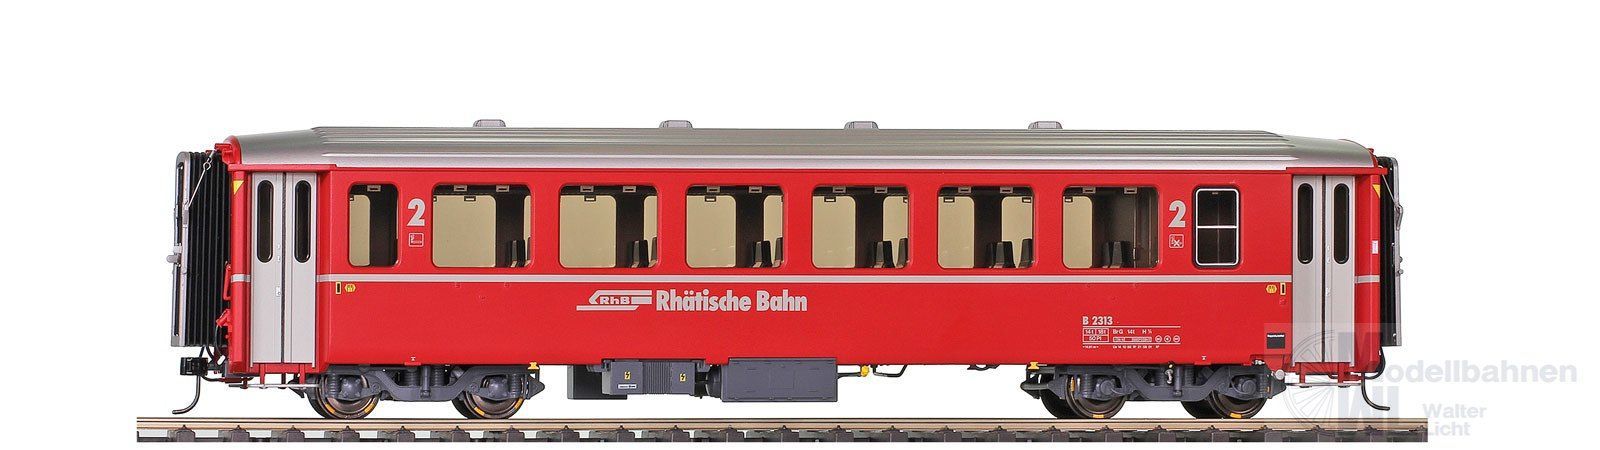 Bemo 9555149 - Einheitswagen I RhB B 2459 refit rot mit Logo 0m